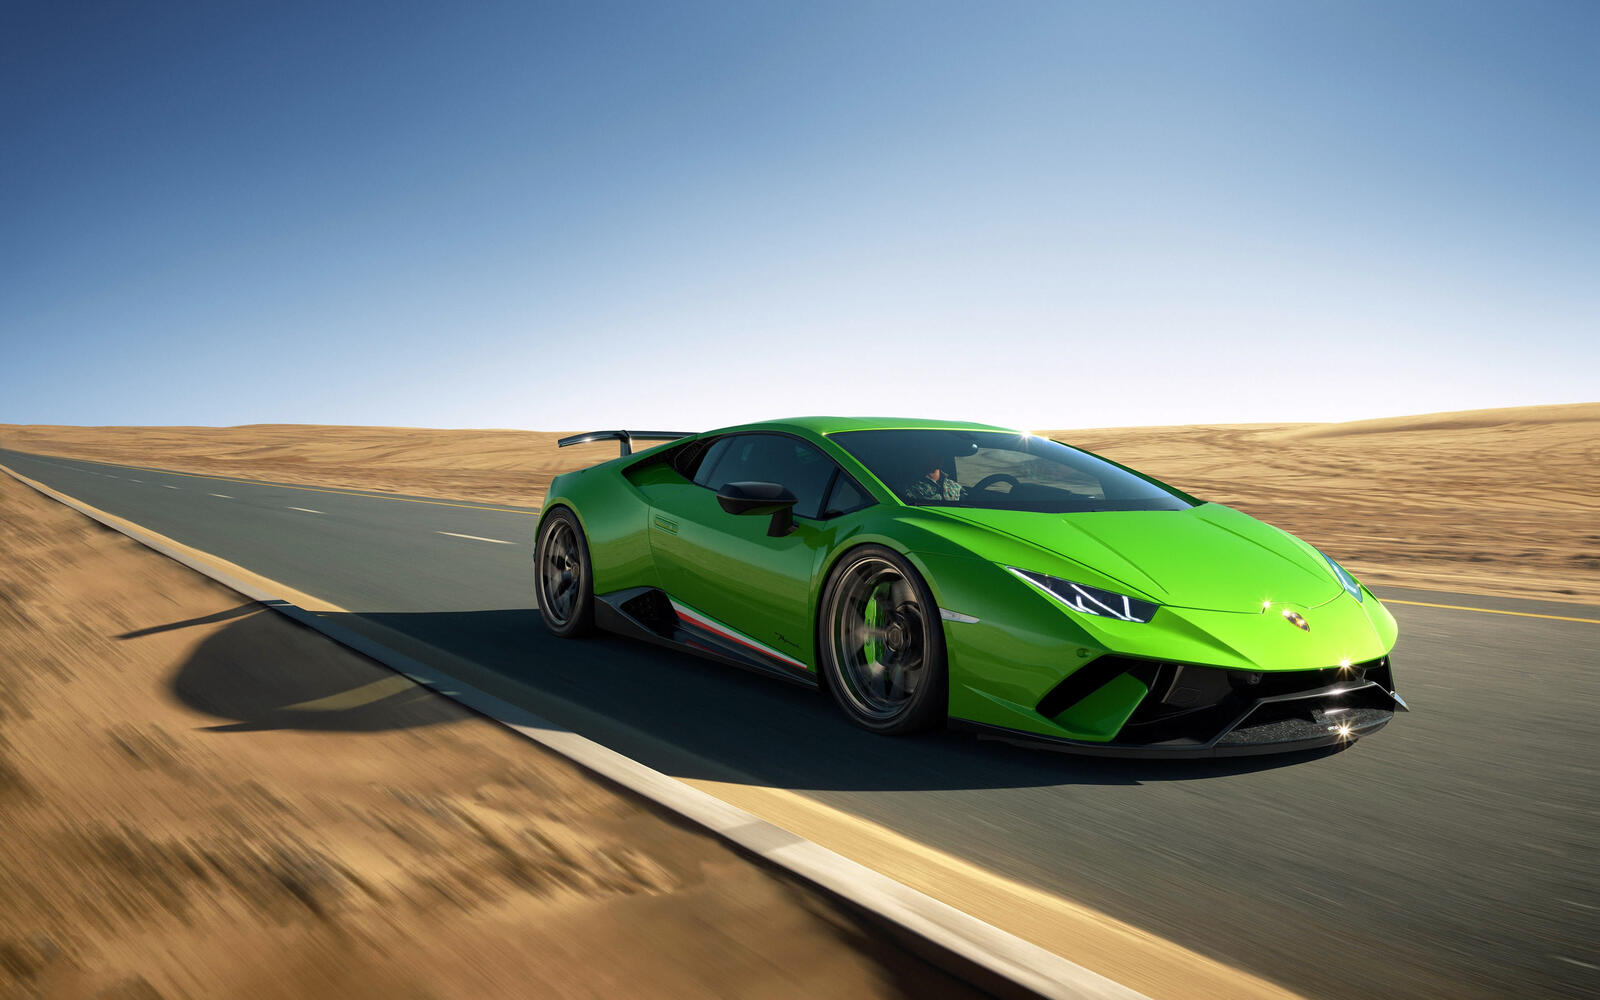 Free photo A bright green Lamborghini Huracan driving down a desert road